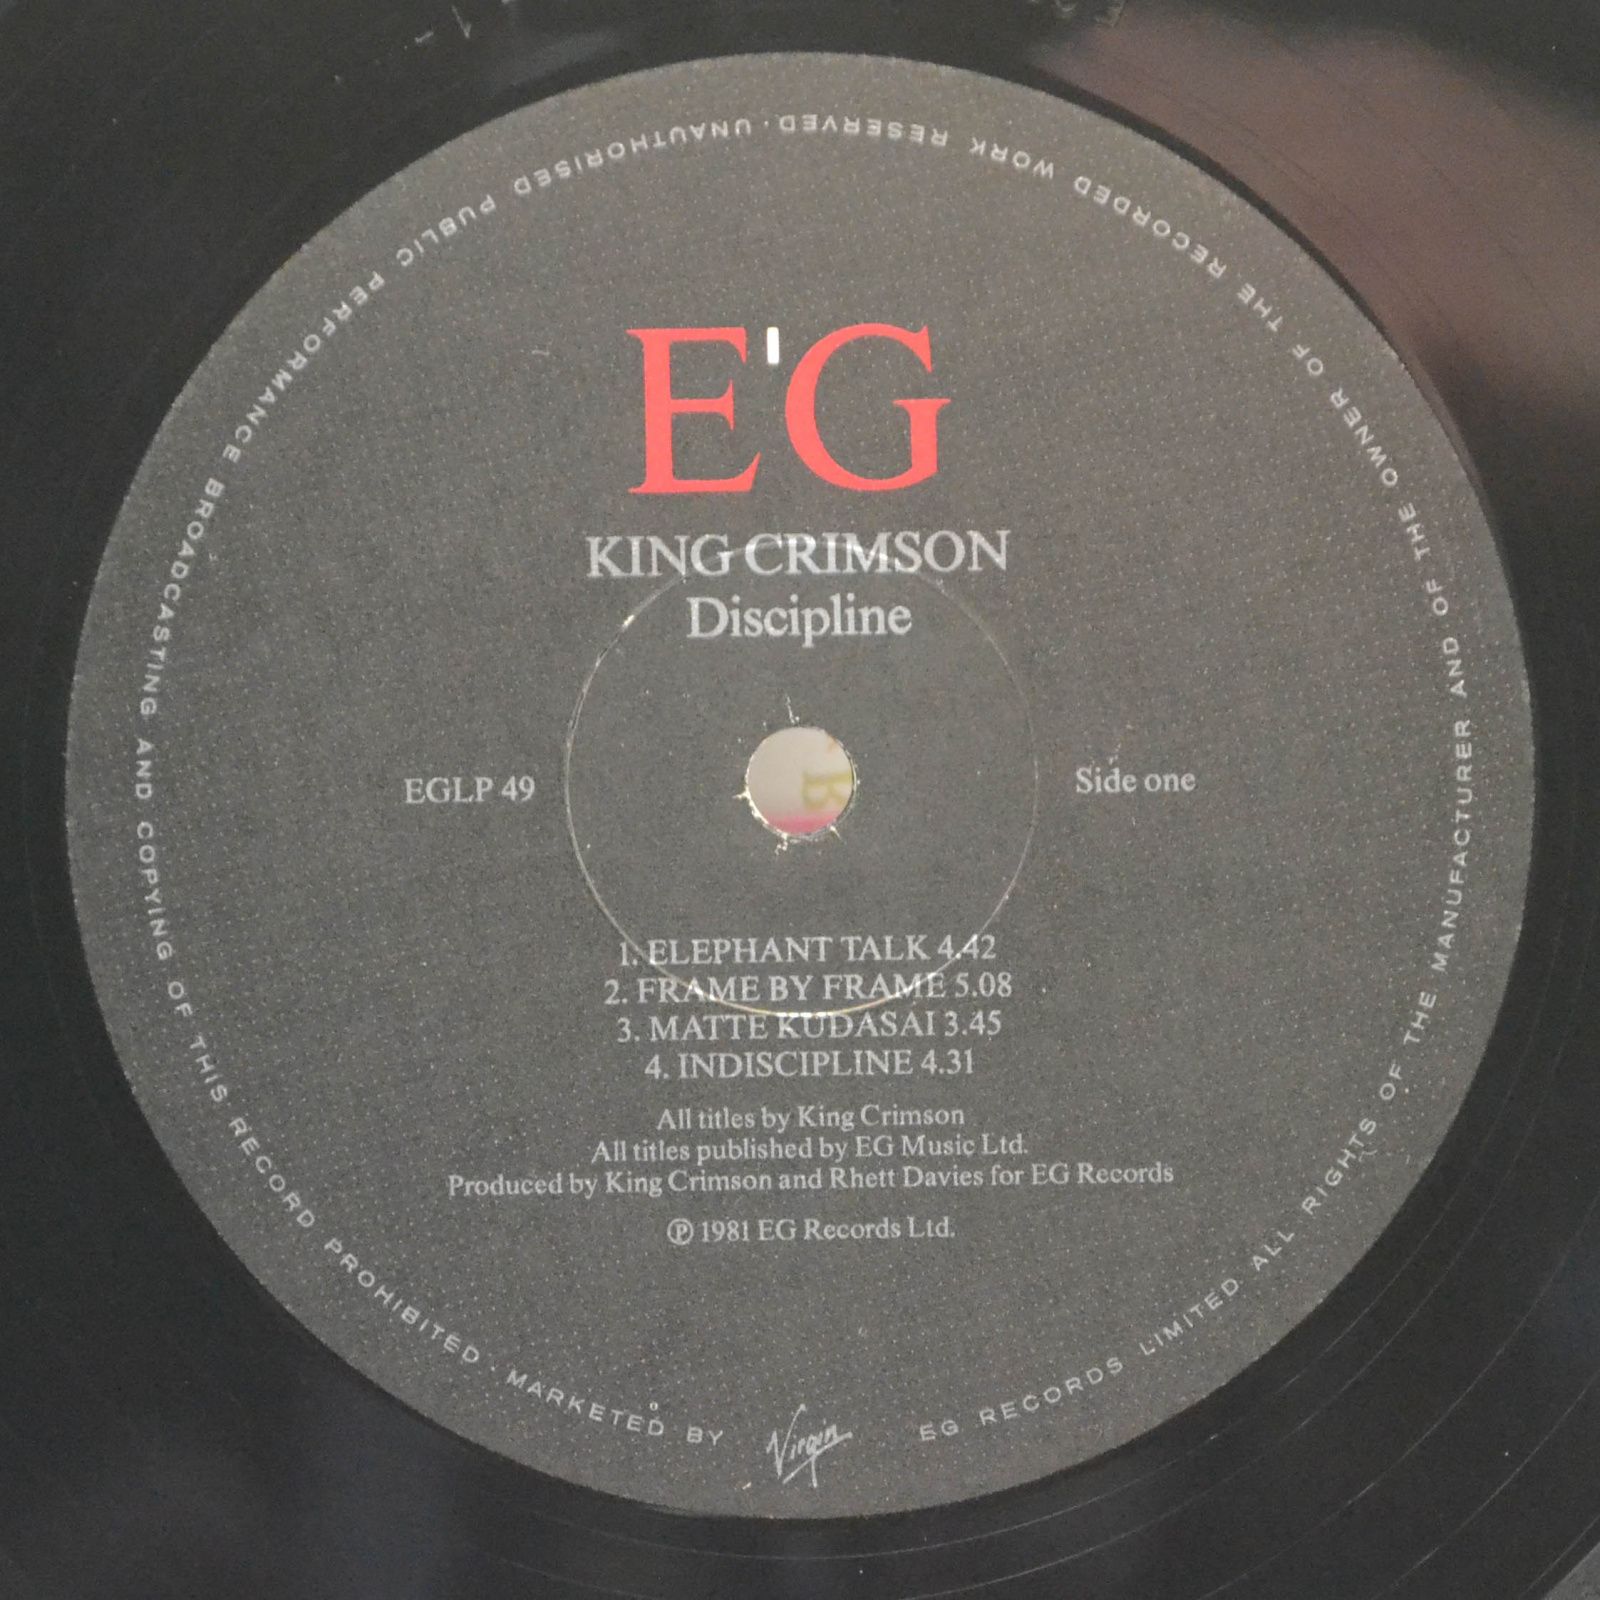 King Crimson — Discipline (UK), 1981